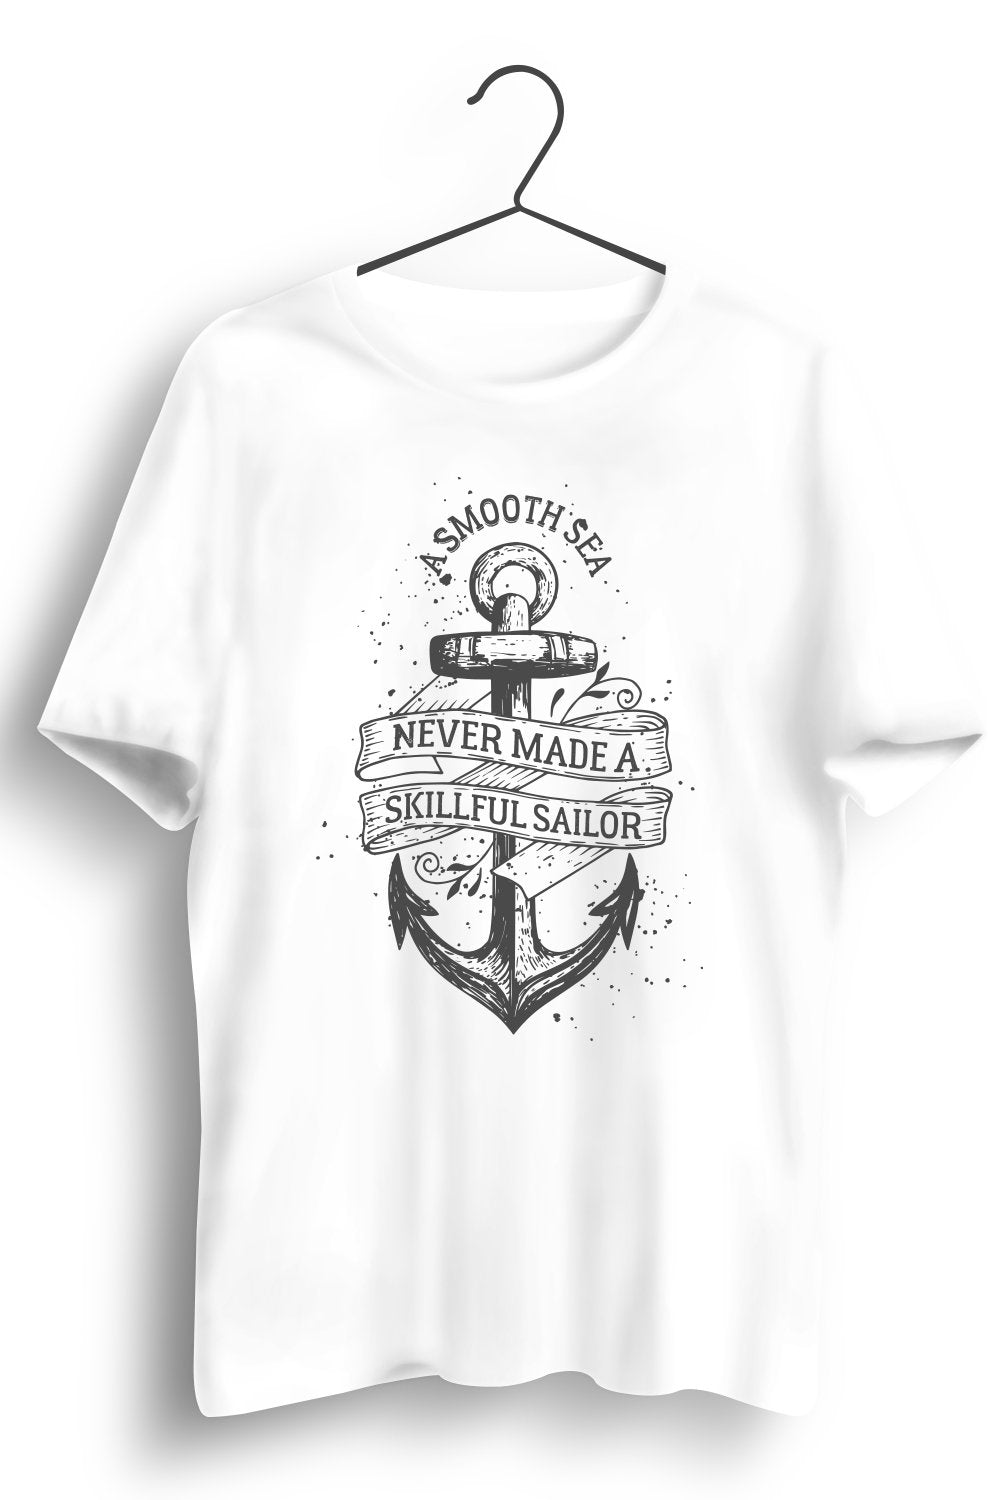 Sailor Graphic Printed White Tshirt